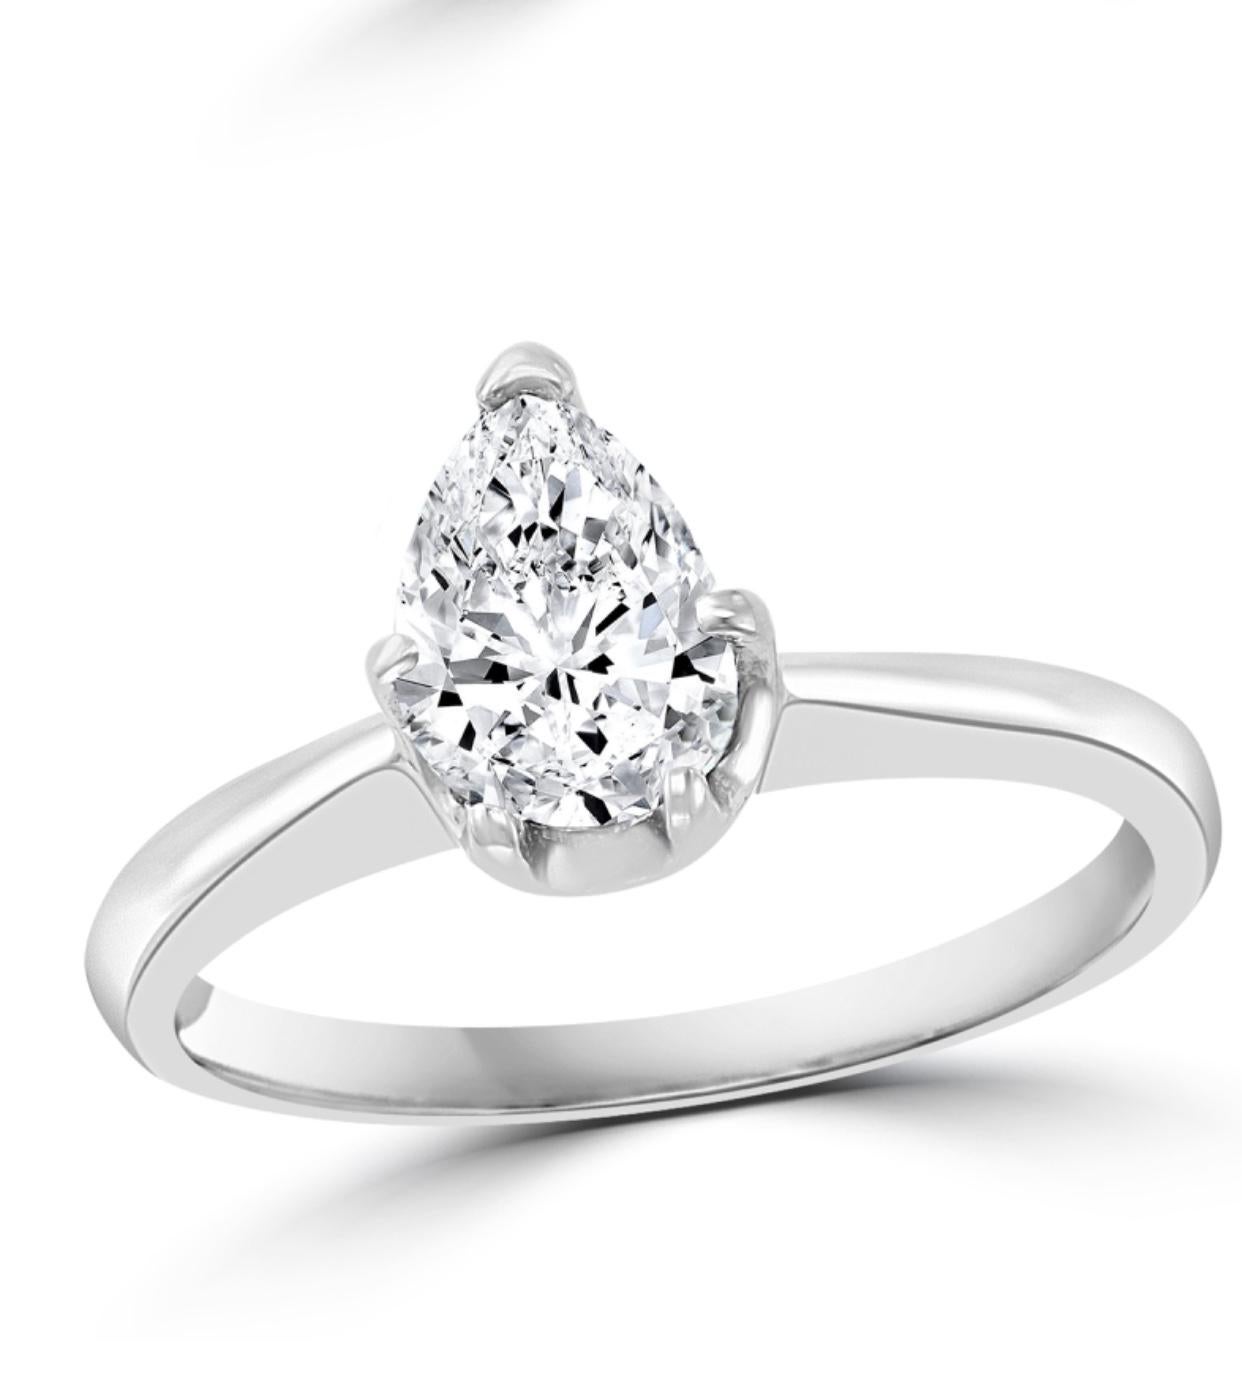 1.2 Carat Pear Shape Center Diamond Engagement 14 Karat White Gold Ring 2